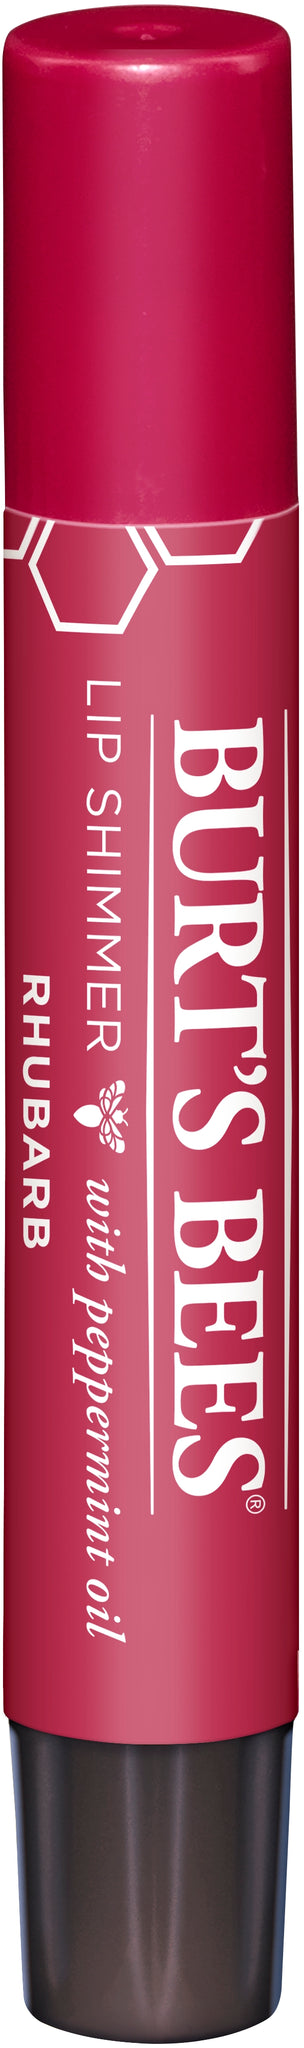 Burt's Bees Lip Shimmer 2.6 g / Rhubarb